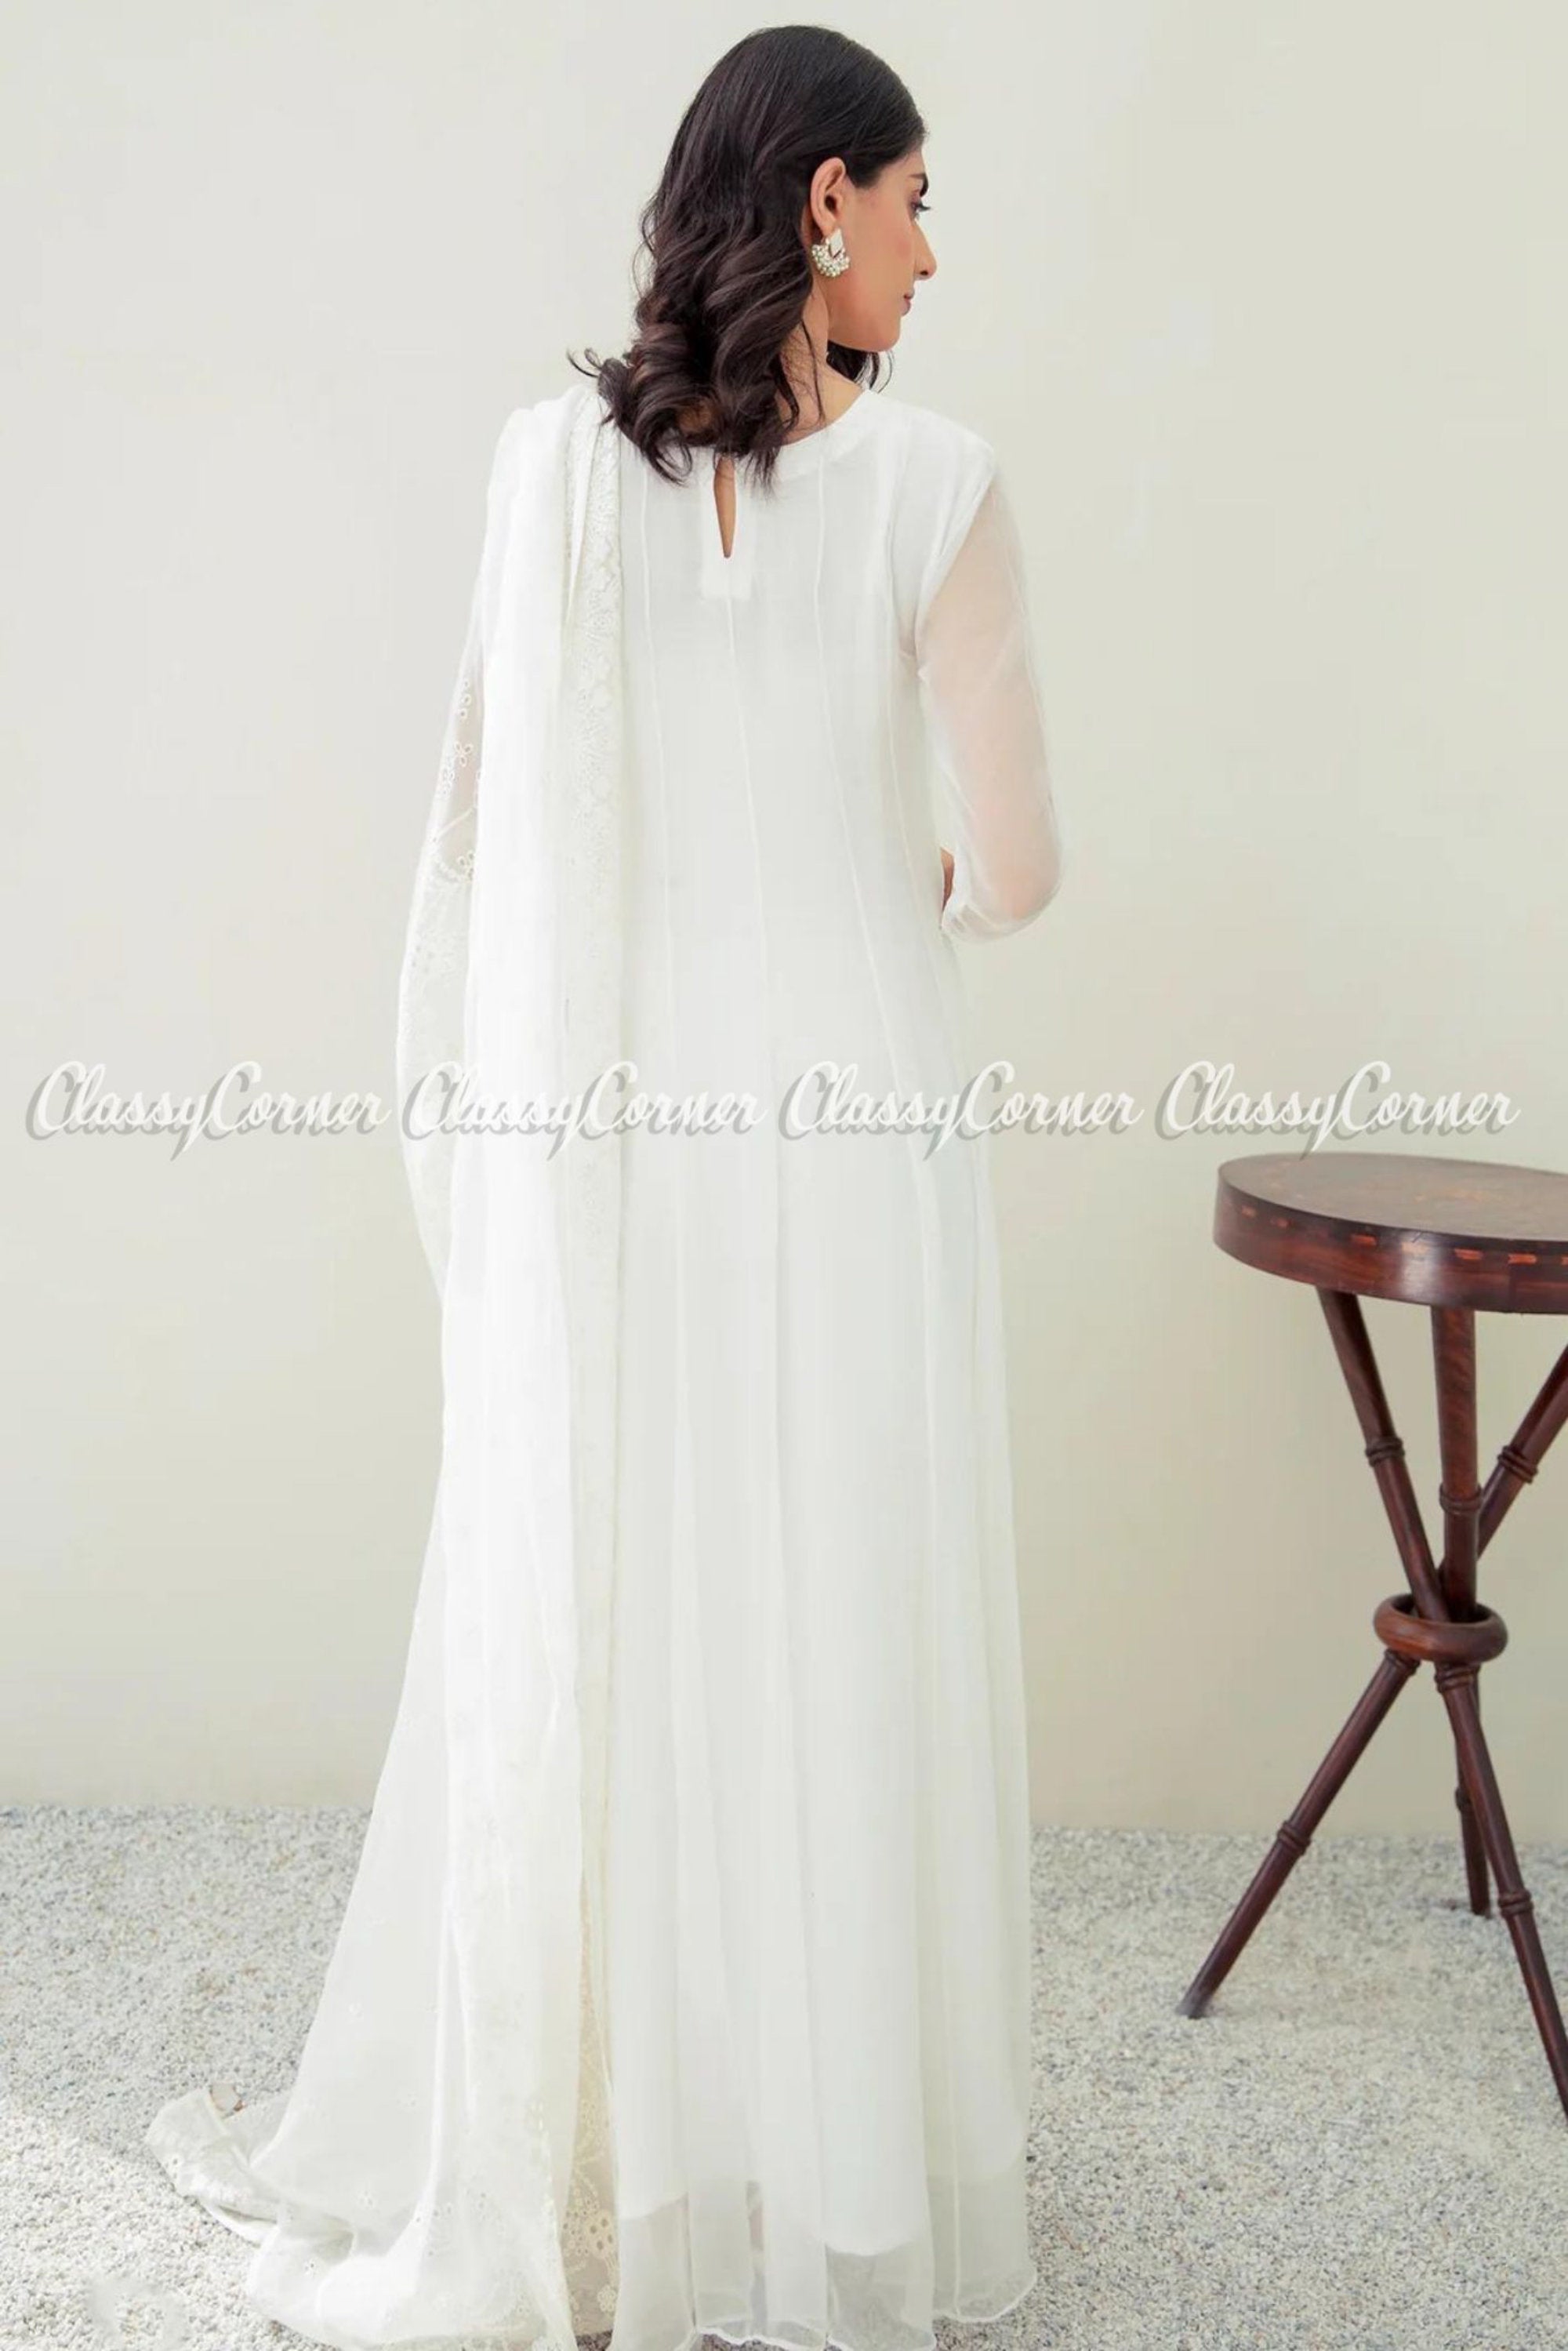 𝘛𝘩𝘪𝘴 𝘨𝘪𝘳𝘭 𝘥𝘰𝘦𝘴 𝘪𝘵 𝘢𝘭𝘭 🇸🇦 on Instagram: “🤍🤍🤍” | Pakistani  white dress, Combination dresses, Pakistani women dresses